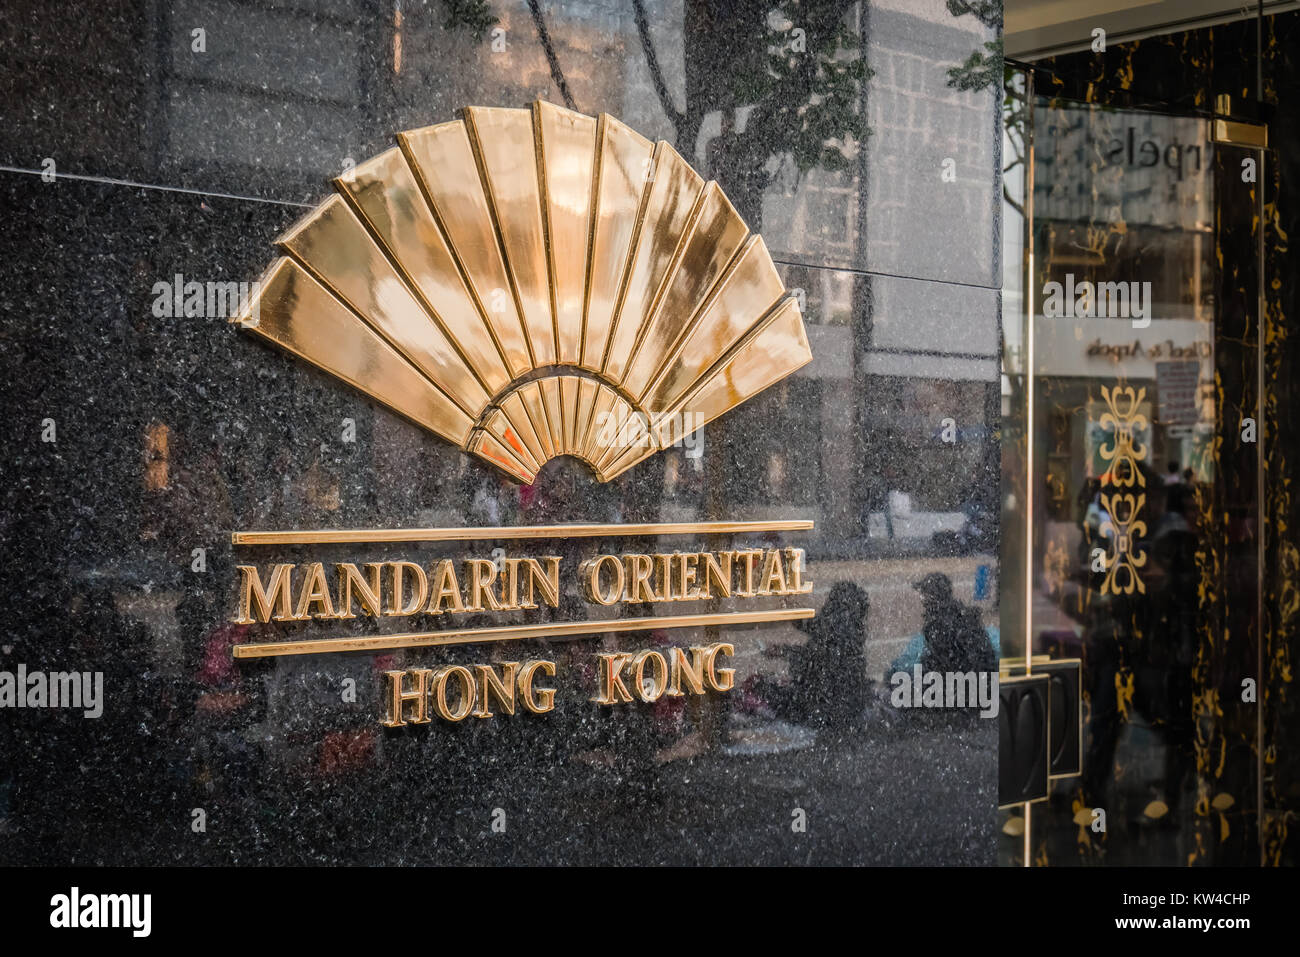 hong kong mandarin oriental hotel Stock Photo